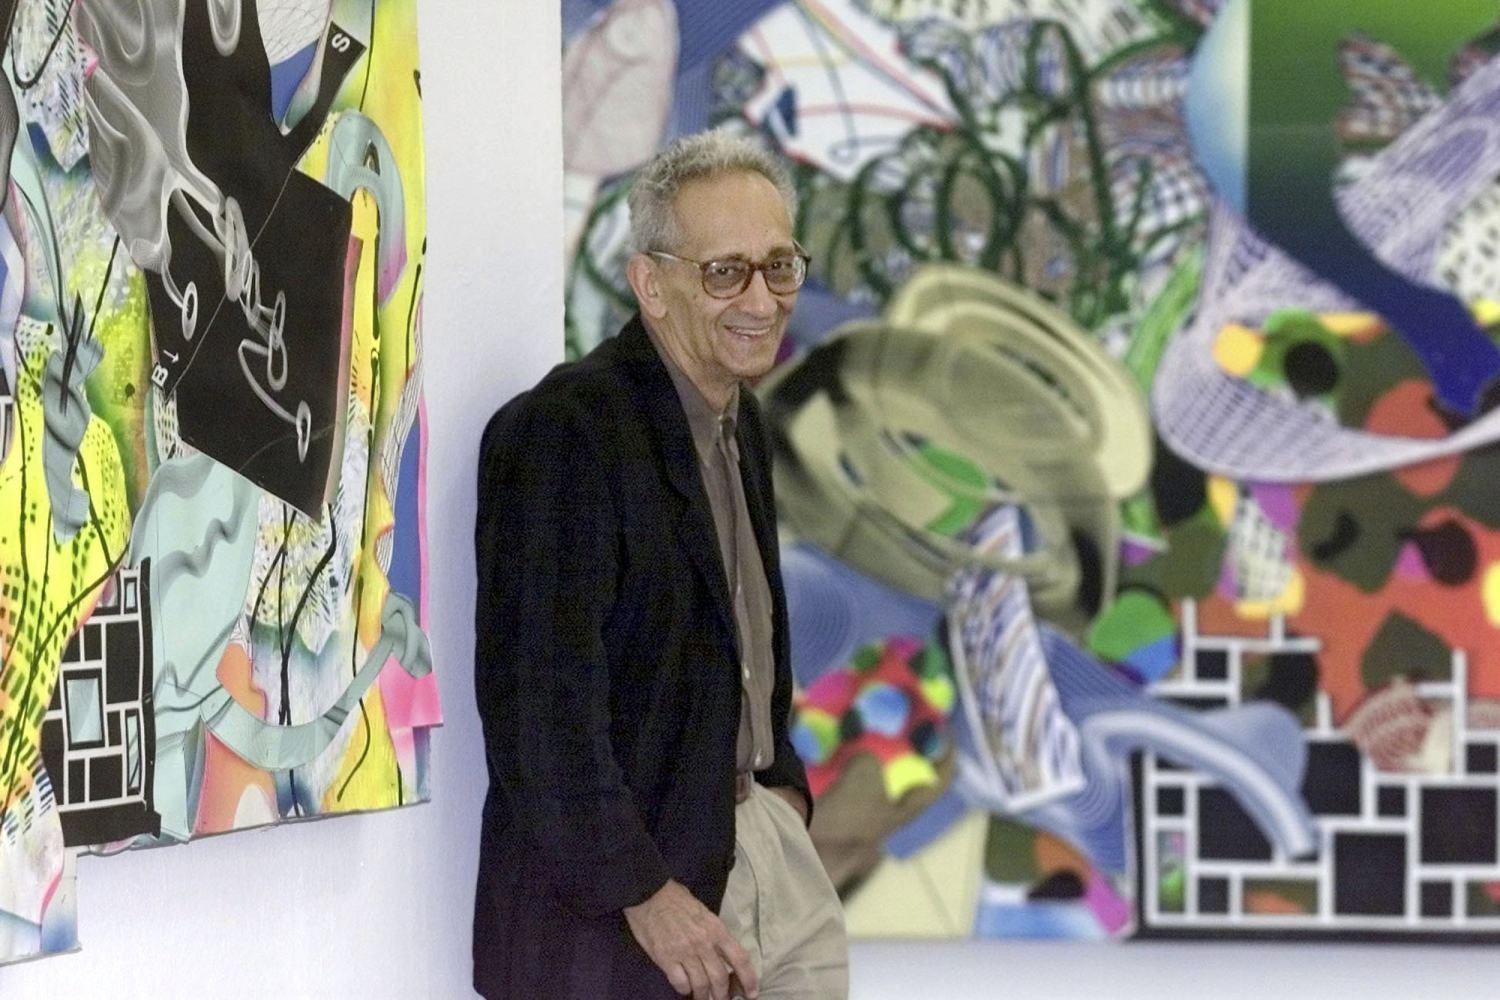 Frank Stella, artist renowned for geometric works, dies at 87